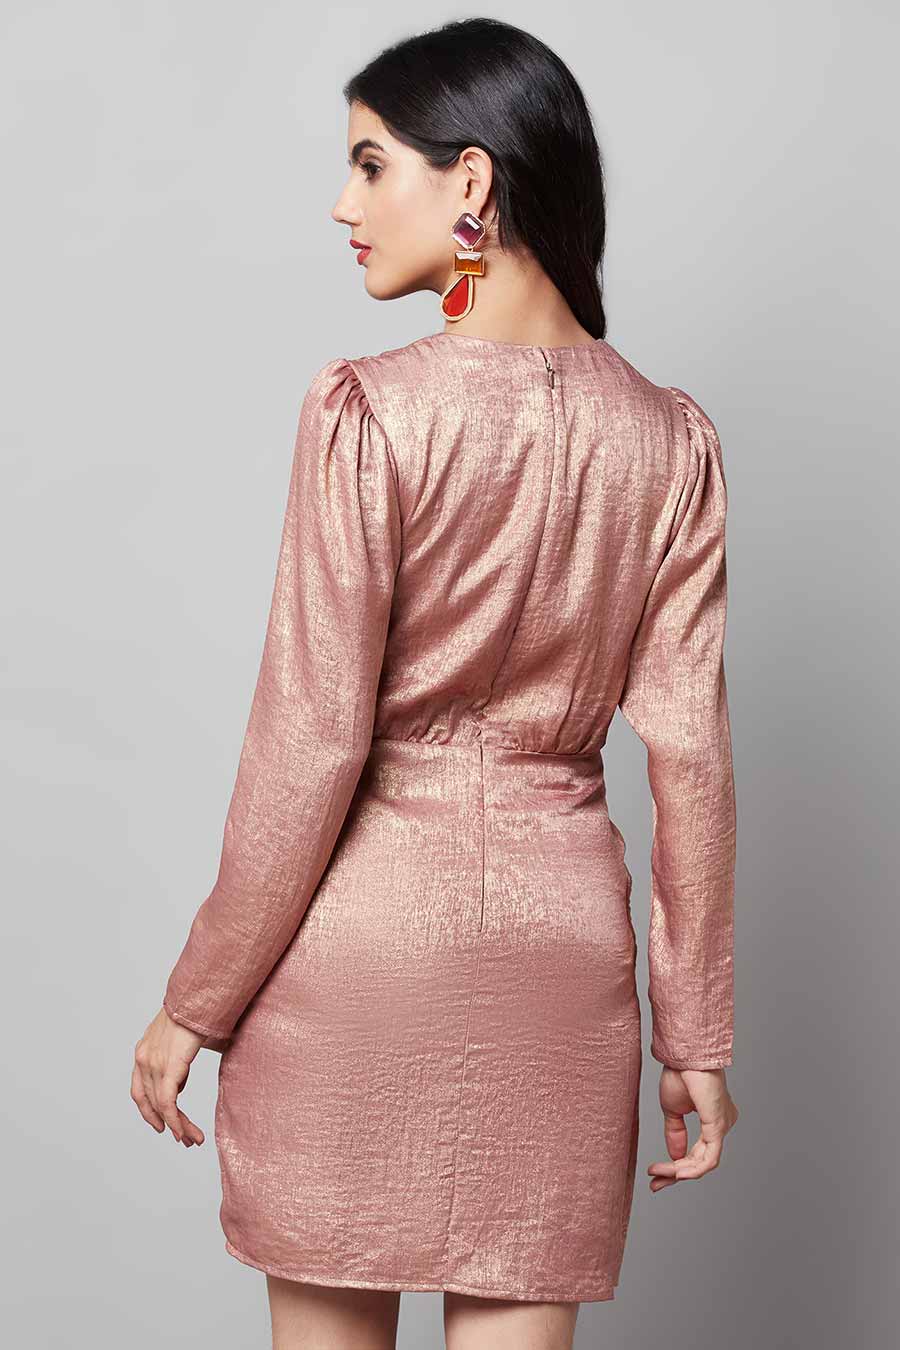 Rose Gold Overlap style Dress